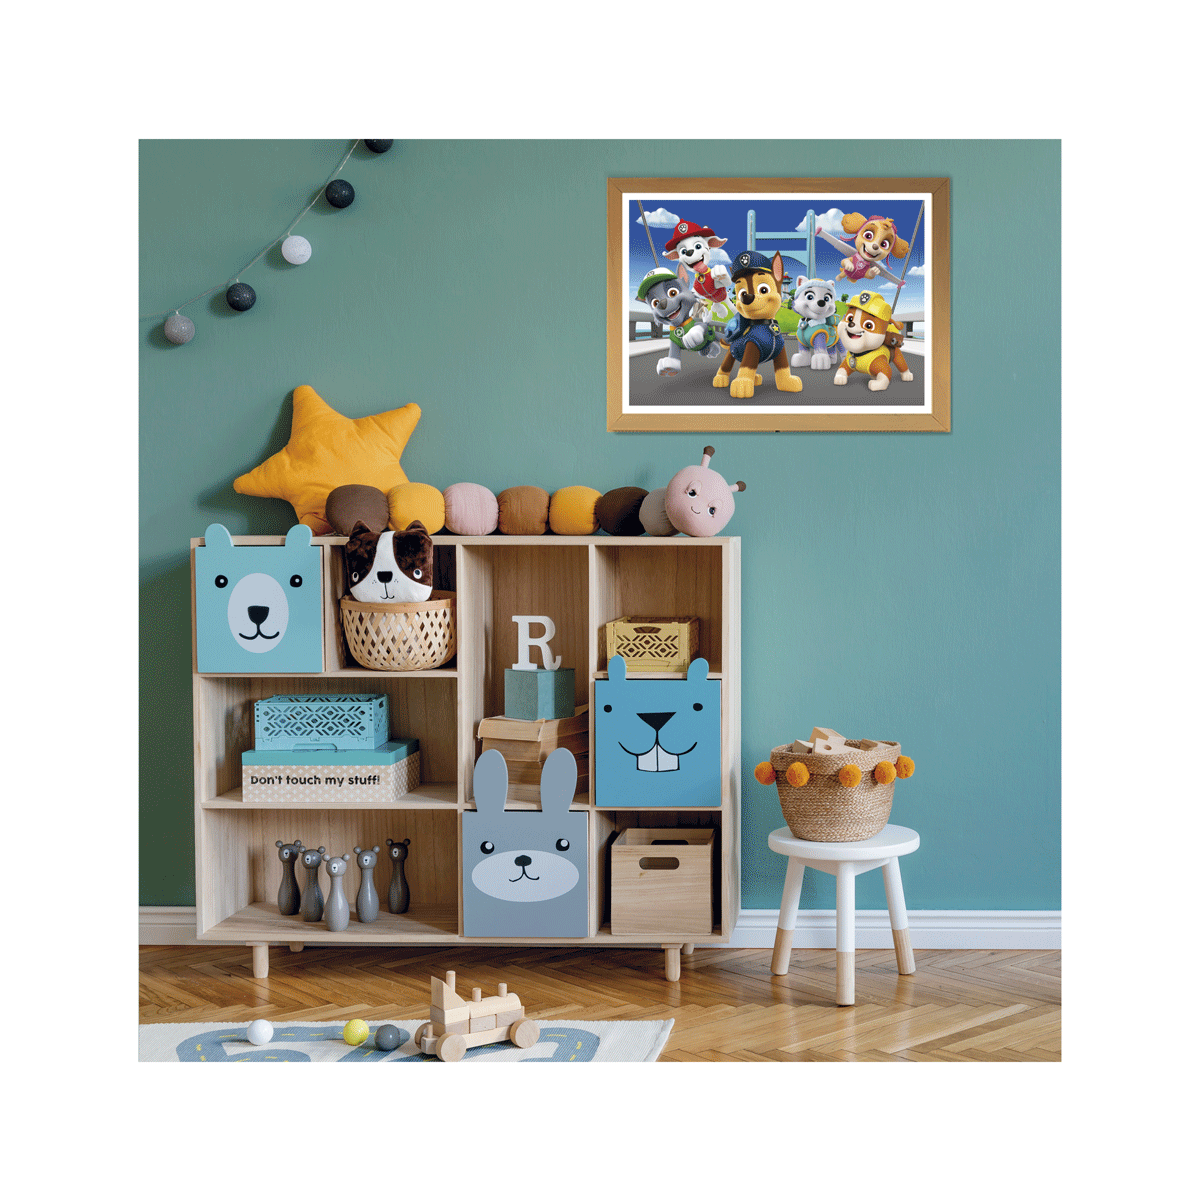 Clementoni supercolor puzzle - paw patrol - 180 pezzi, puzzle bambini 7 anni - CLEMENTONI